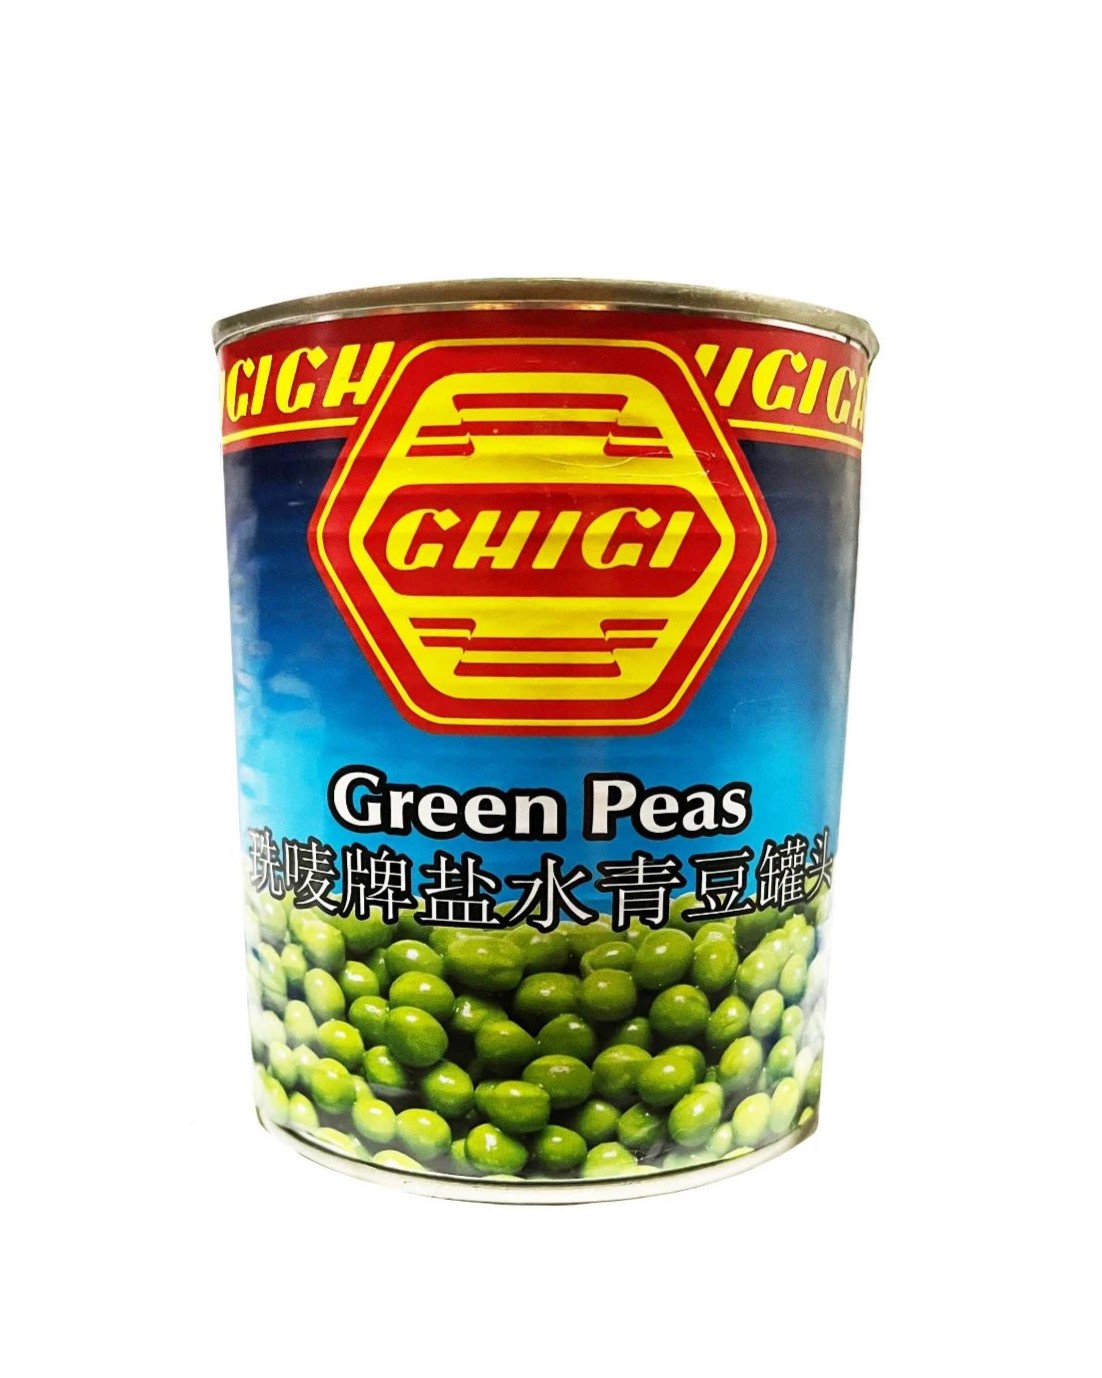 GHIGI Green Peas